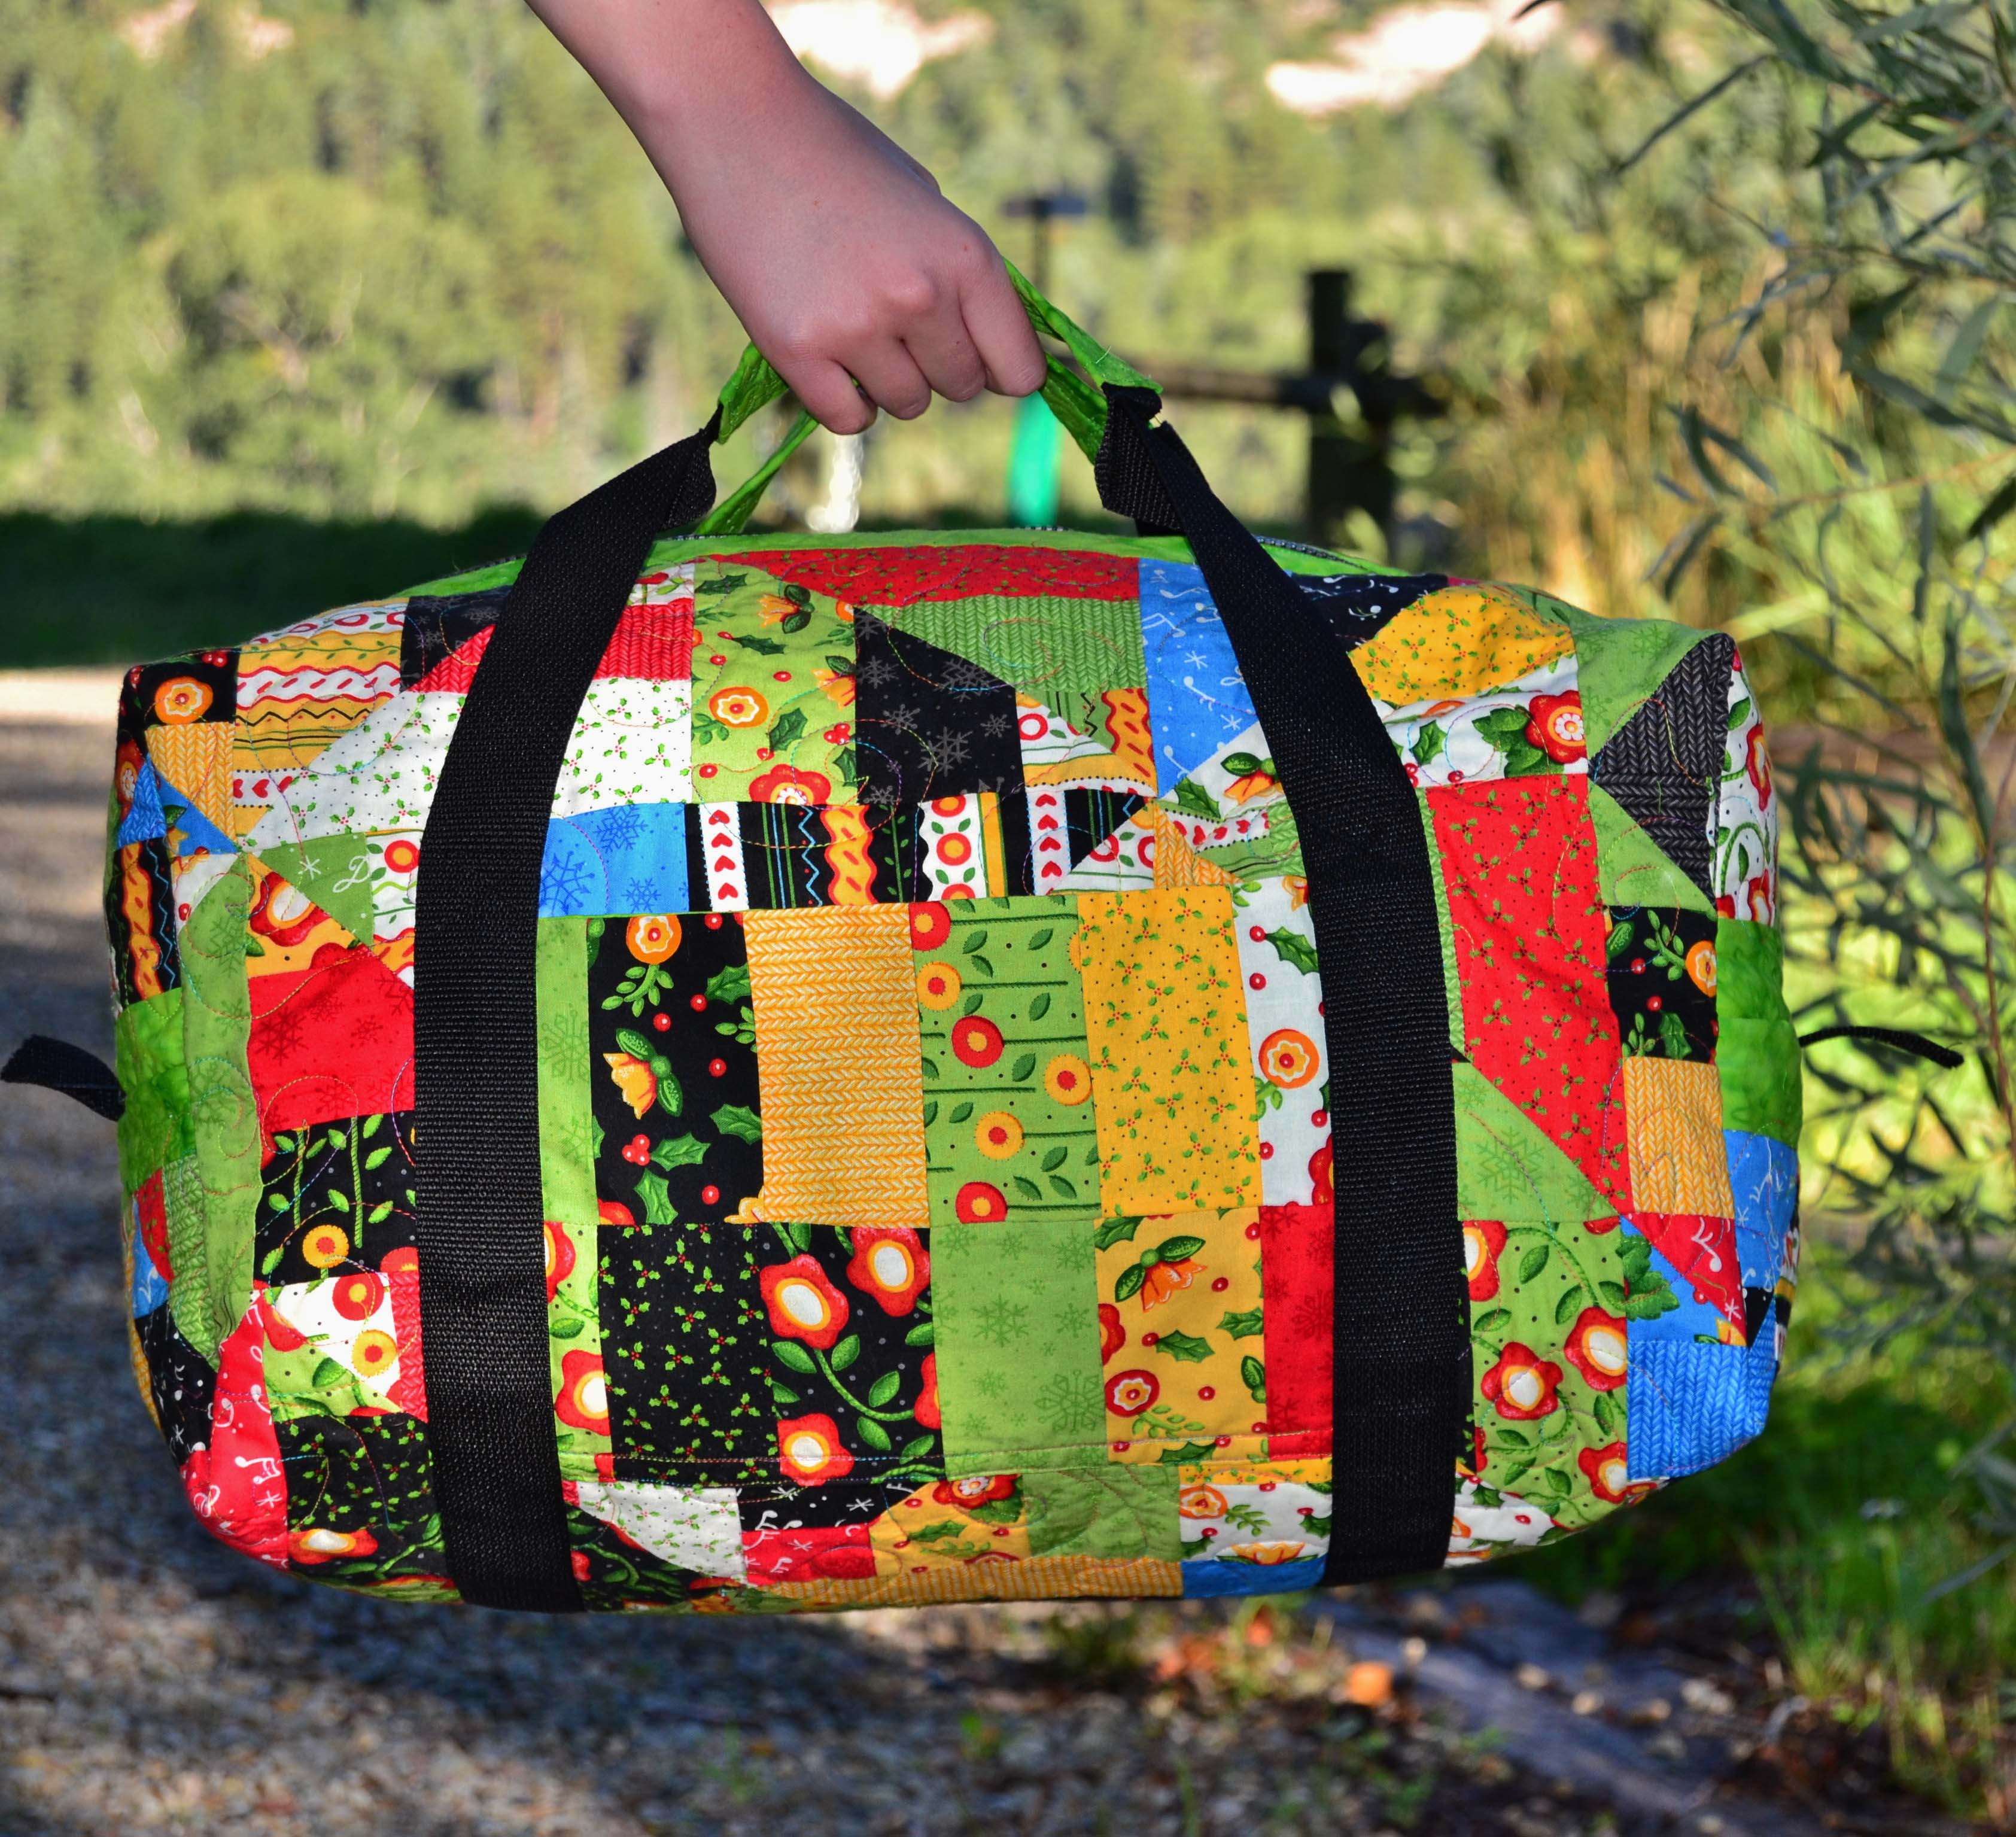 Shows bright green custom duffle bag by Princess YellowBelly Designs